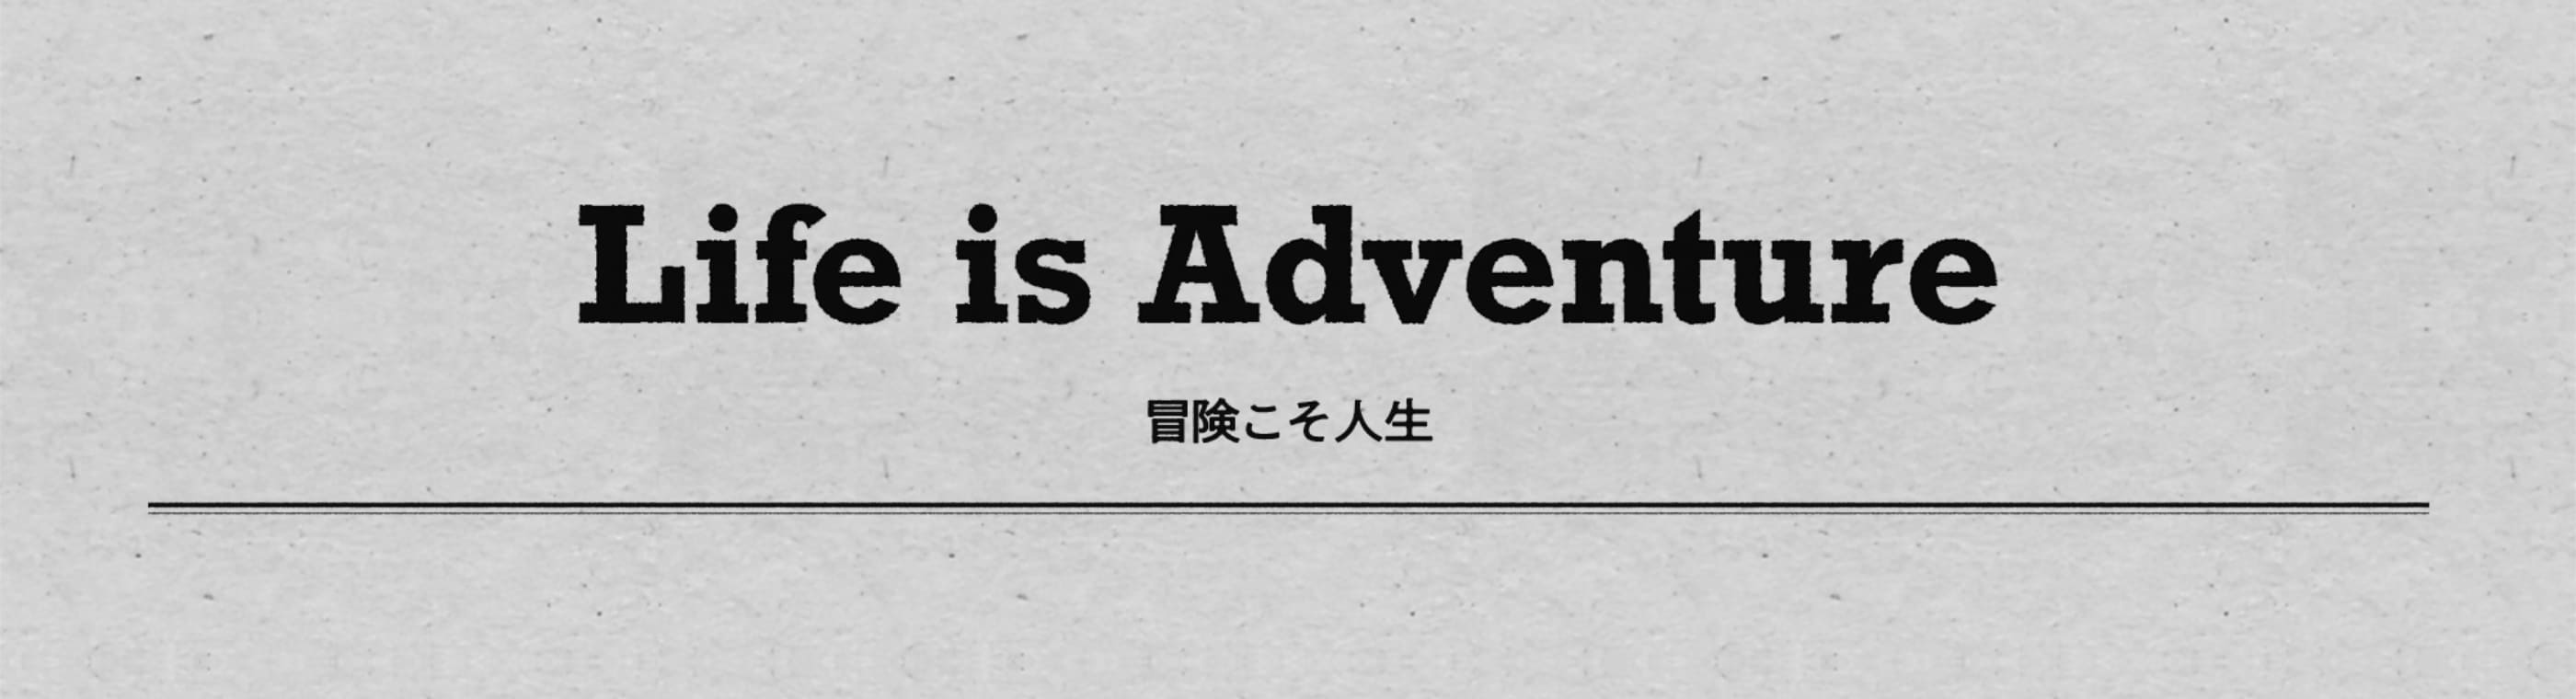 Life is Adventure 冒険こそ人生